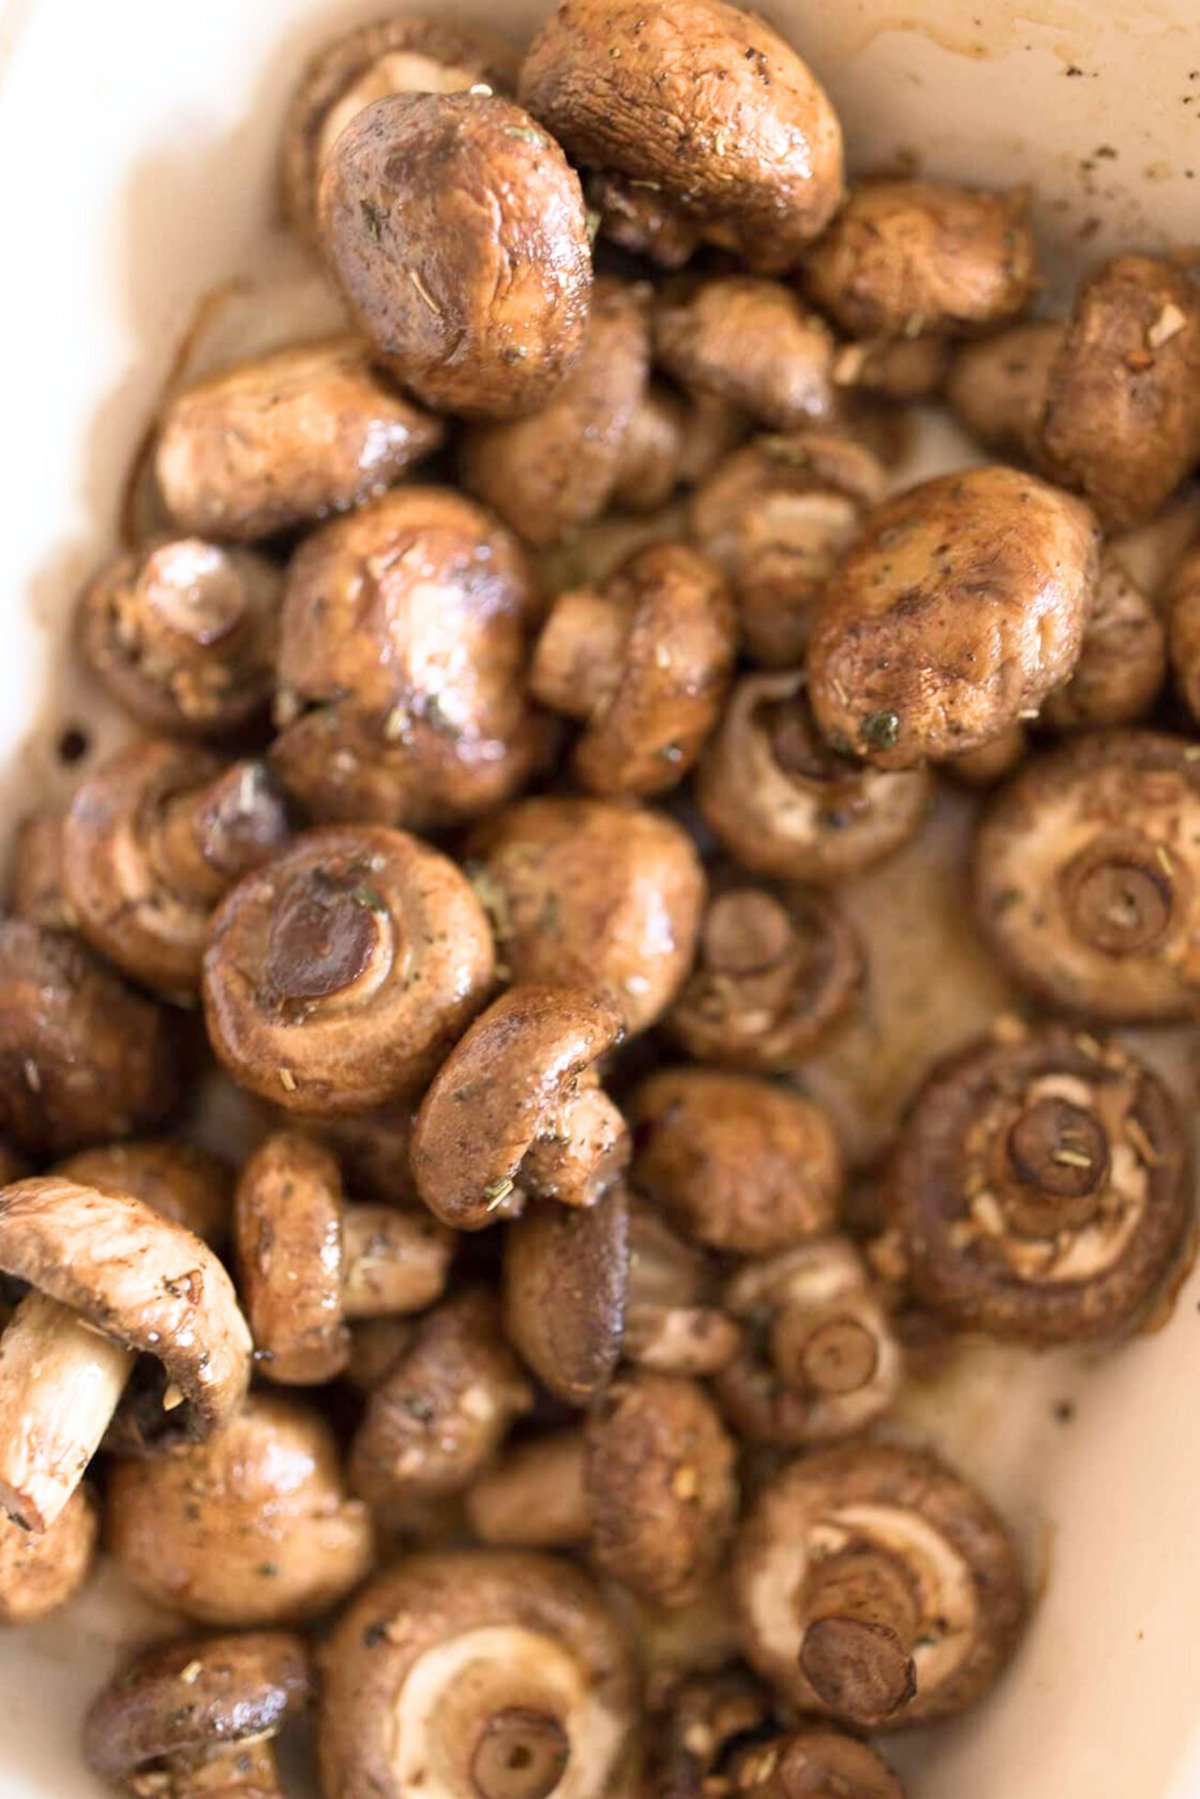 https://julieblanner.com/wp-content/uploads/2019/02/roasted-mushroom-recipes.jpg